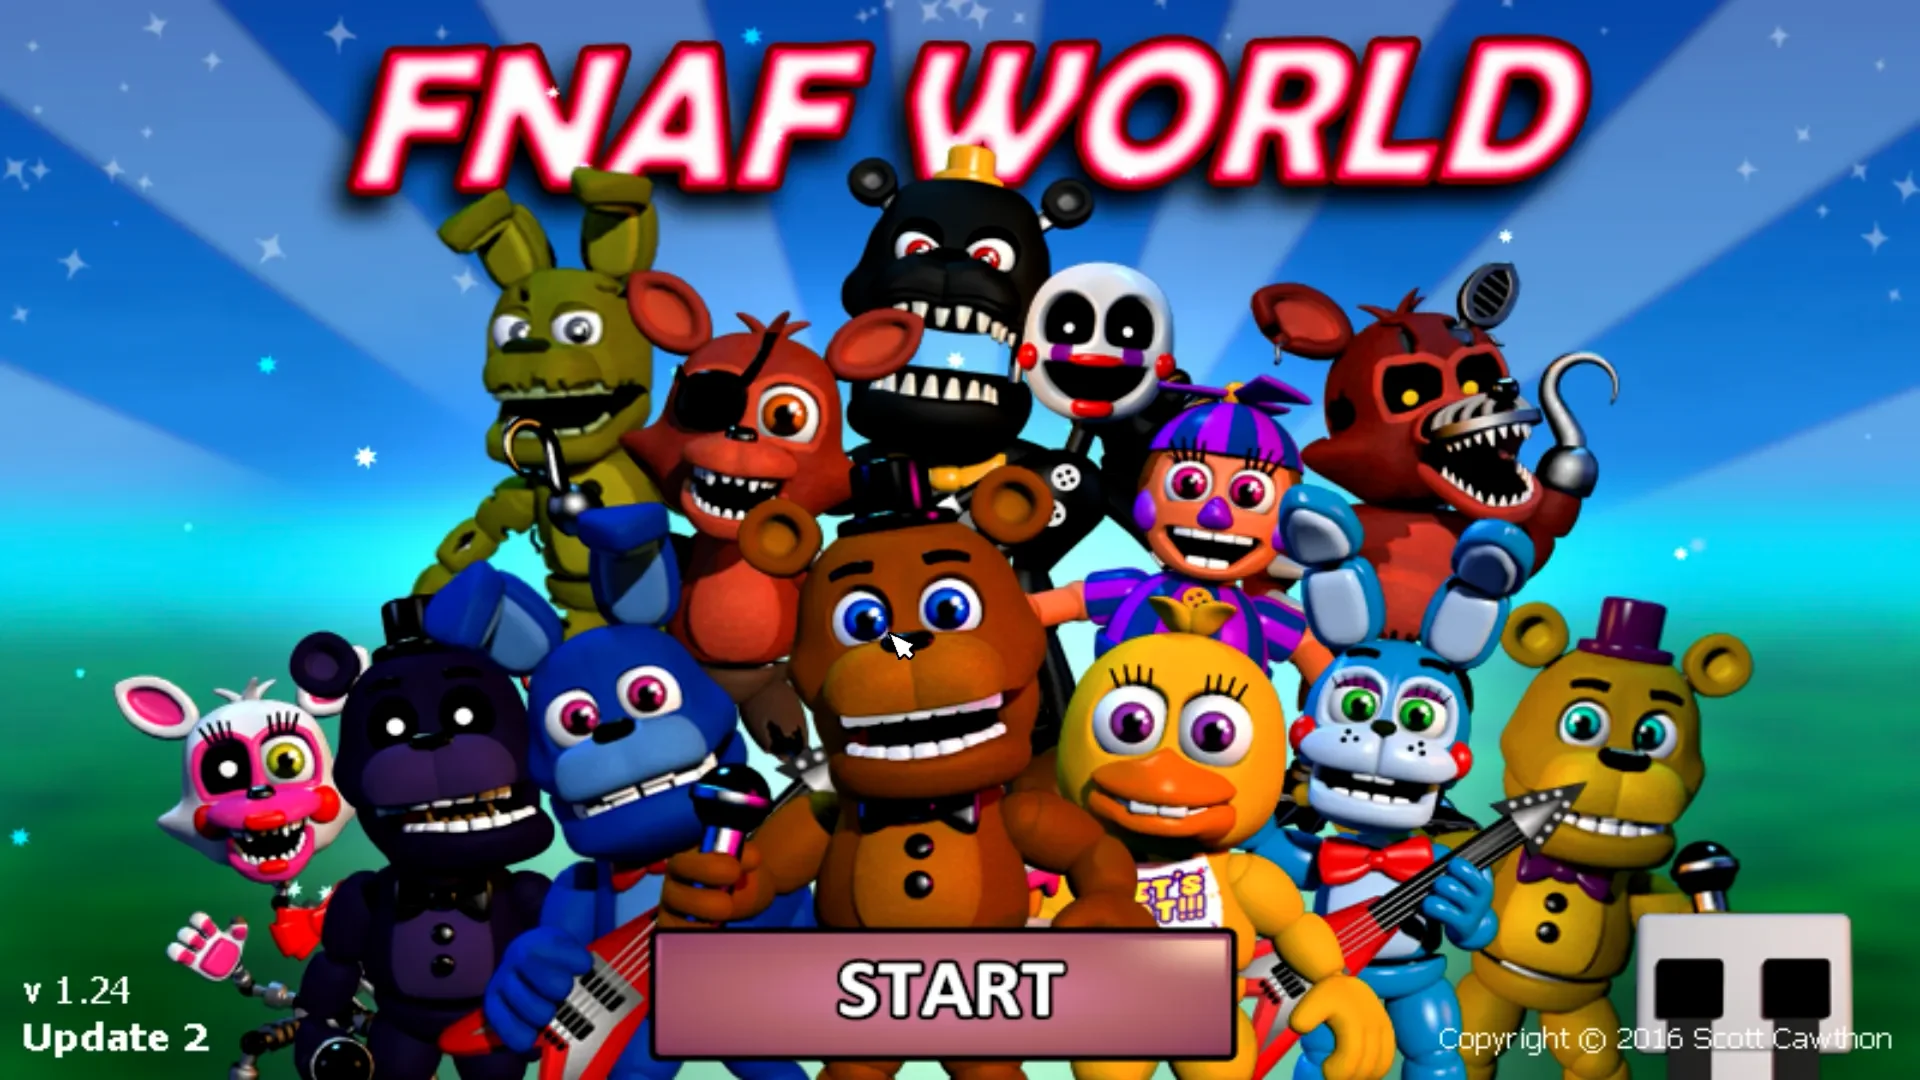 gameplay 2 (fnaf world) on Vimeo